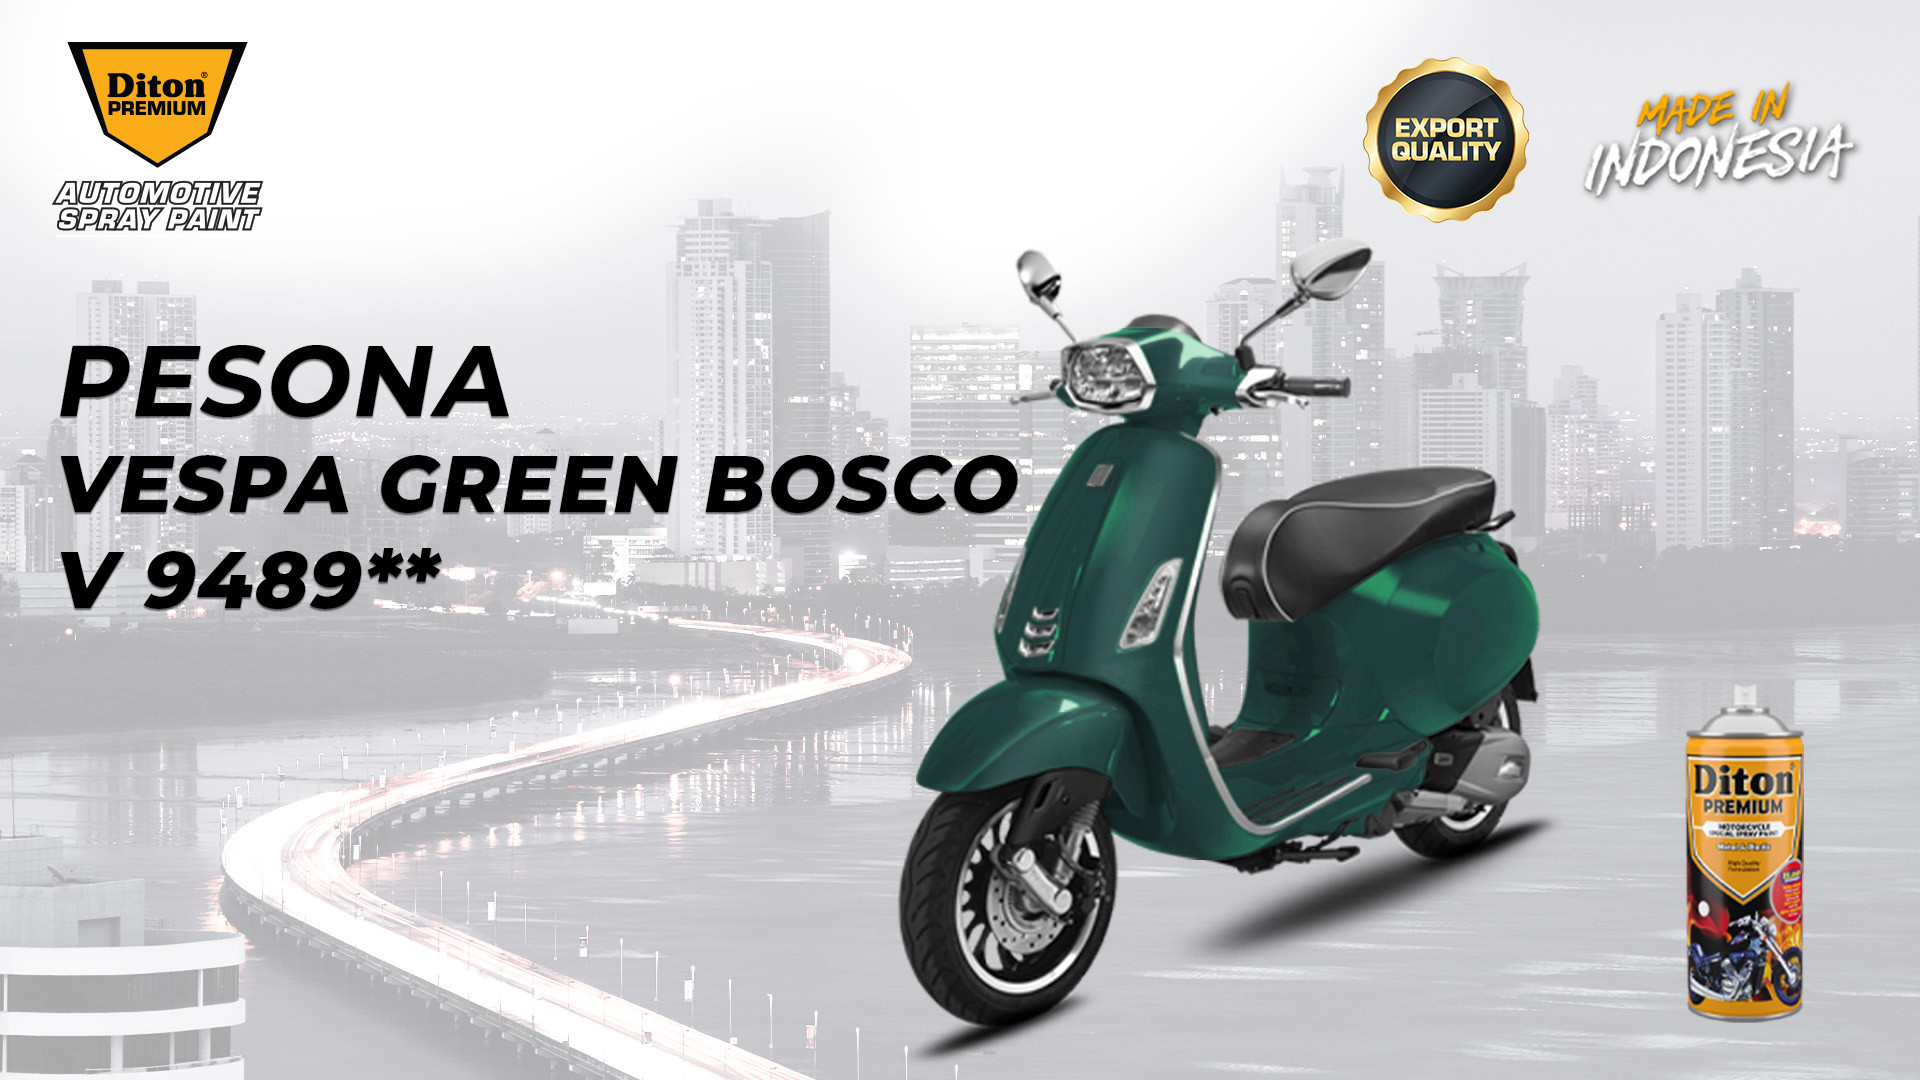 Percantik Motor Anda Dengan Diton Premium Vespa Green Bosco V 9489